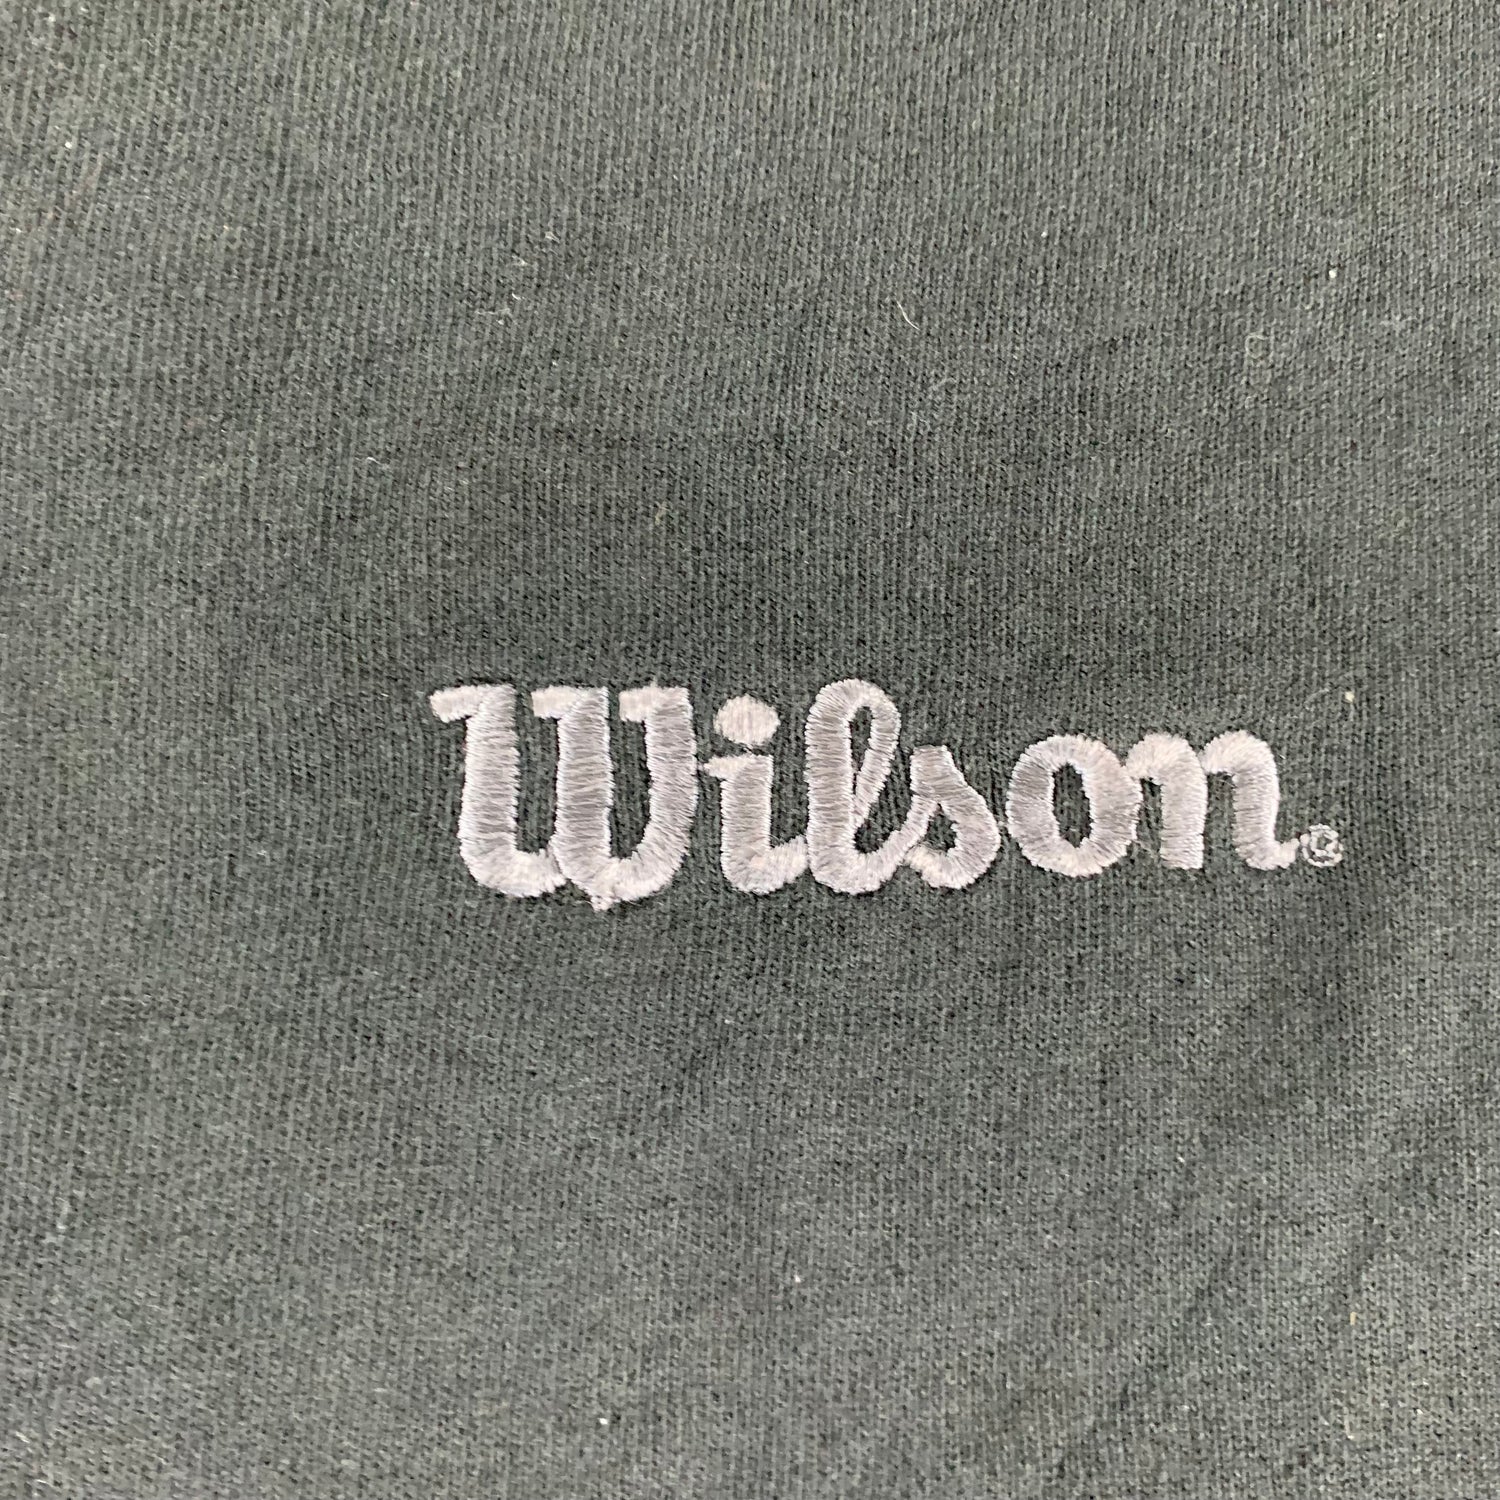 Vintage 1990s Wilson Sweatshirt size XXL